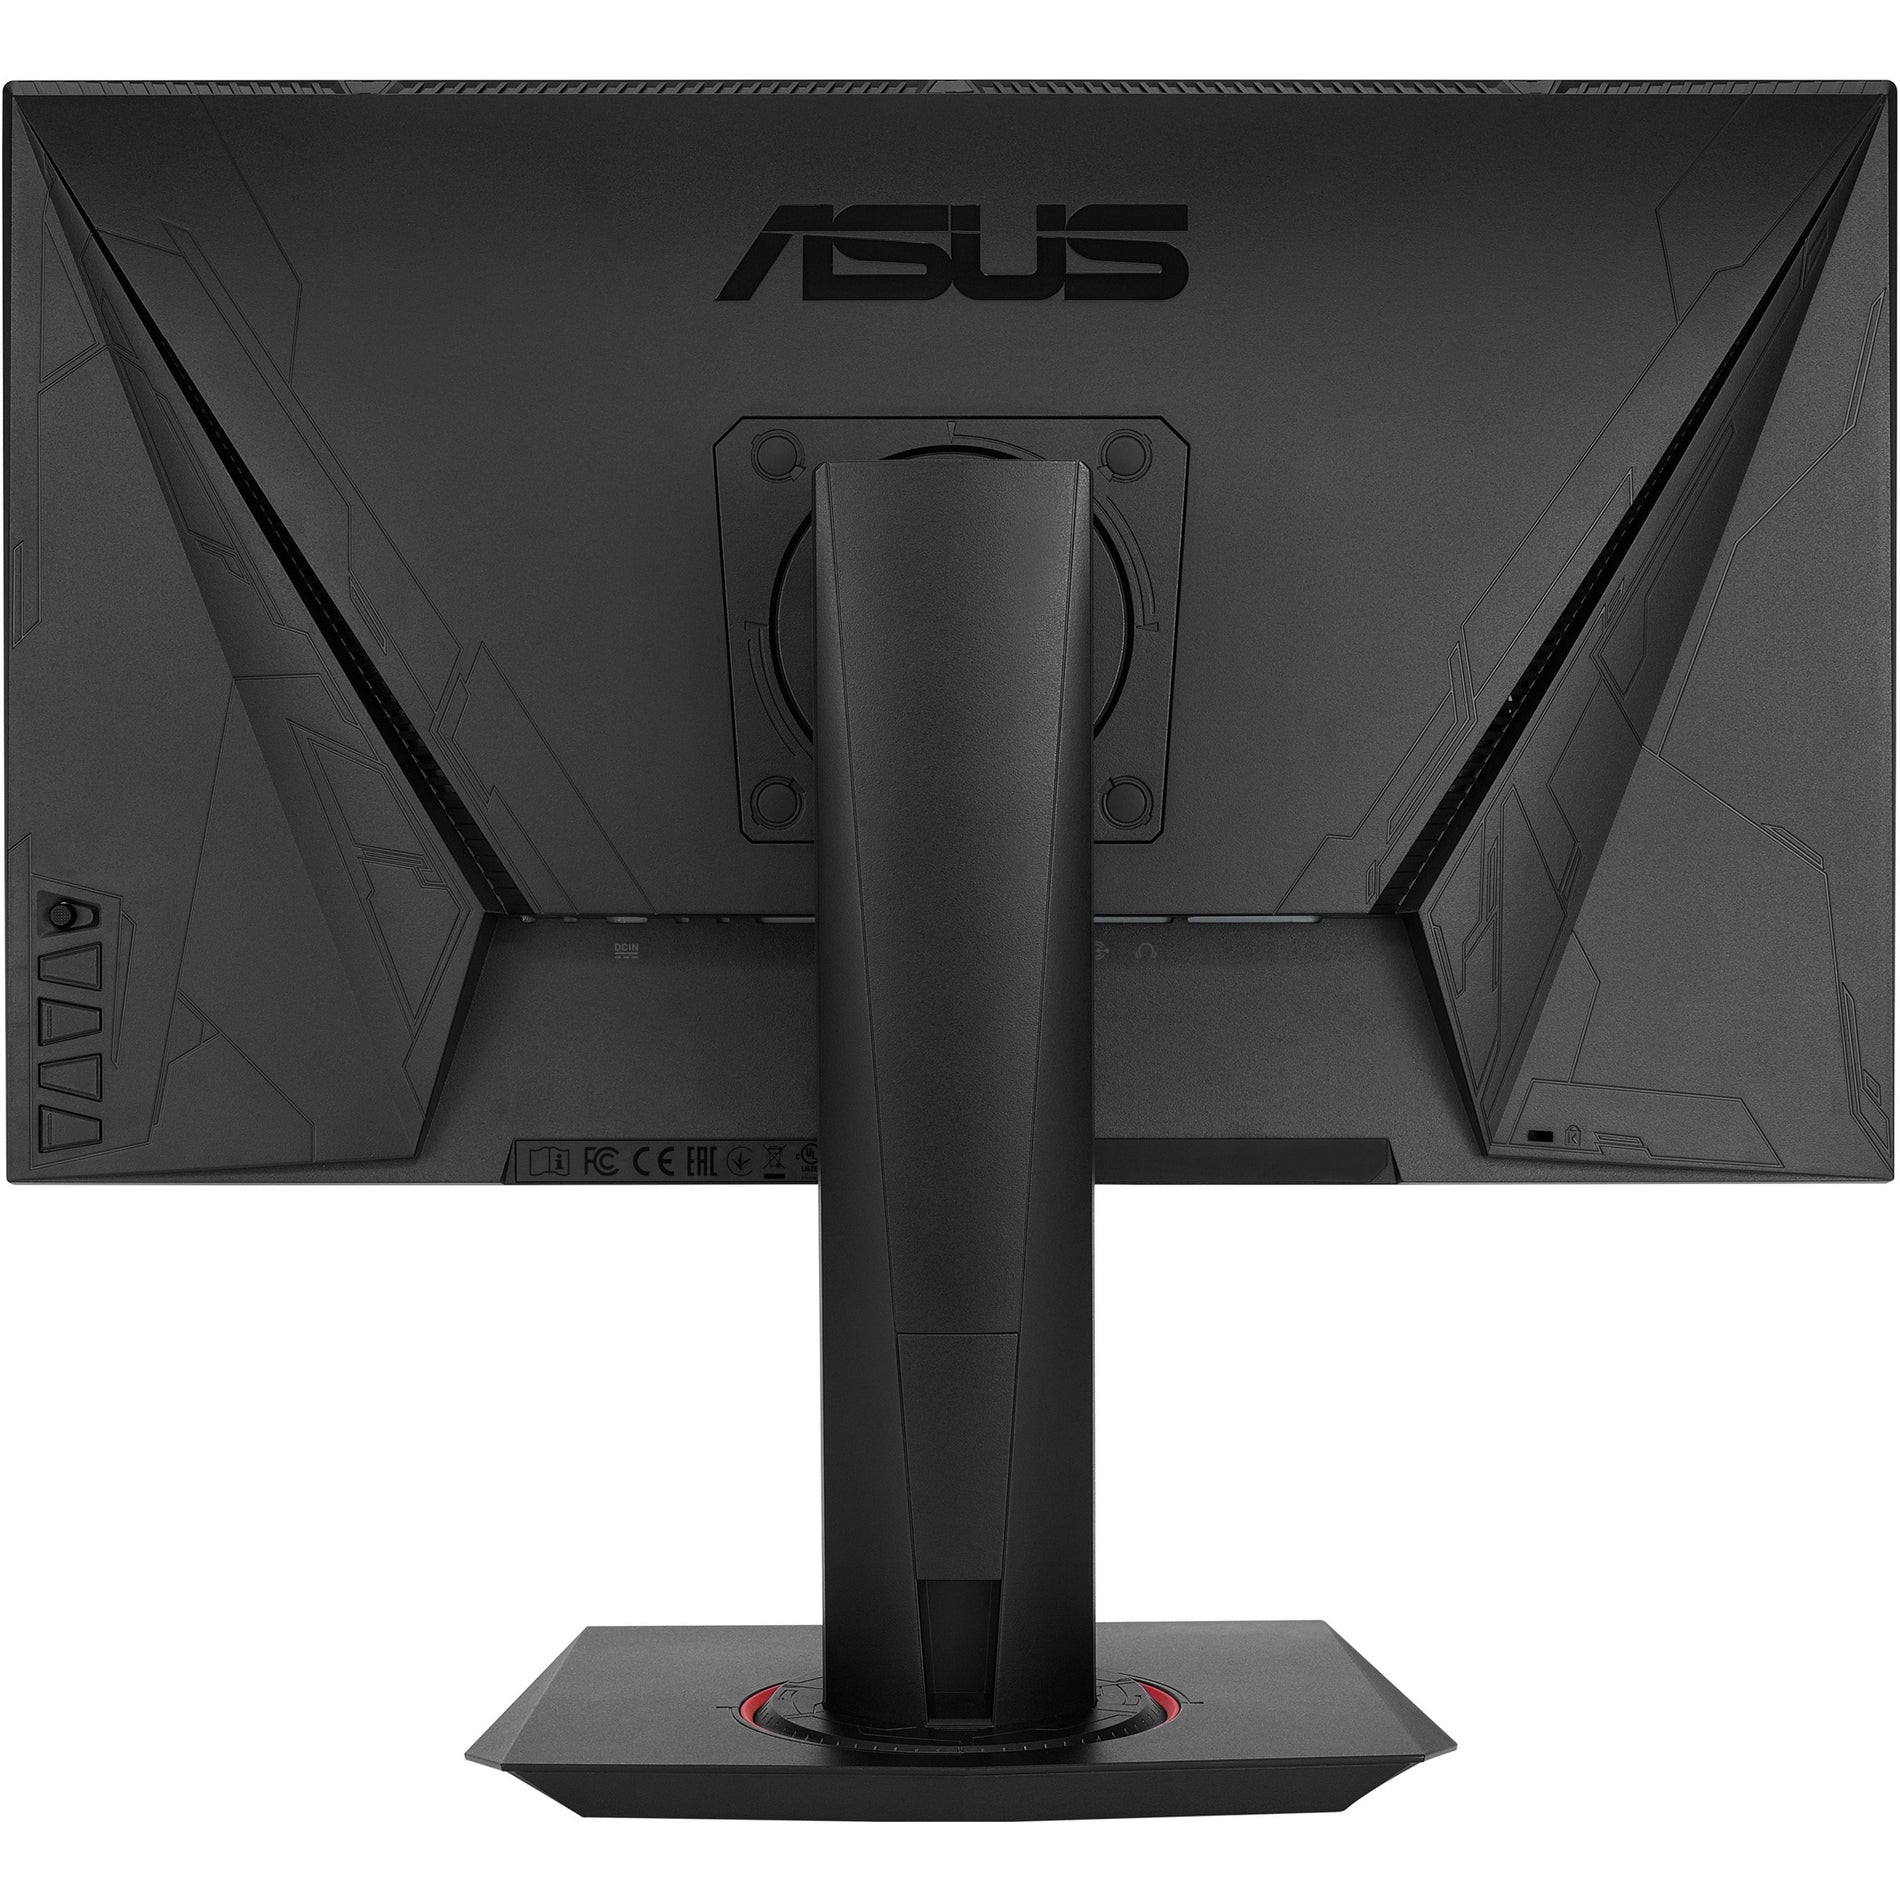 Asus VG248QG Gaming LCD Monitor - Full HD, 24", G-Sync, 120Hz Refresh Rate